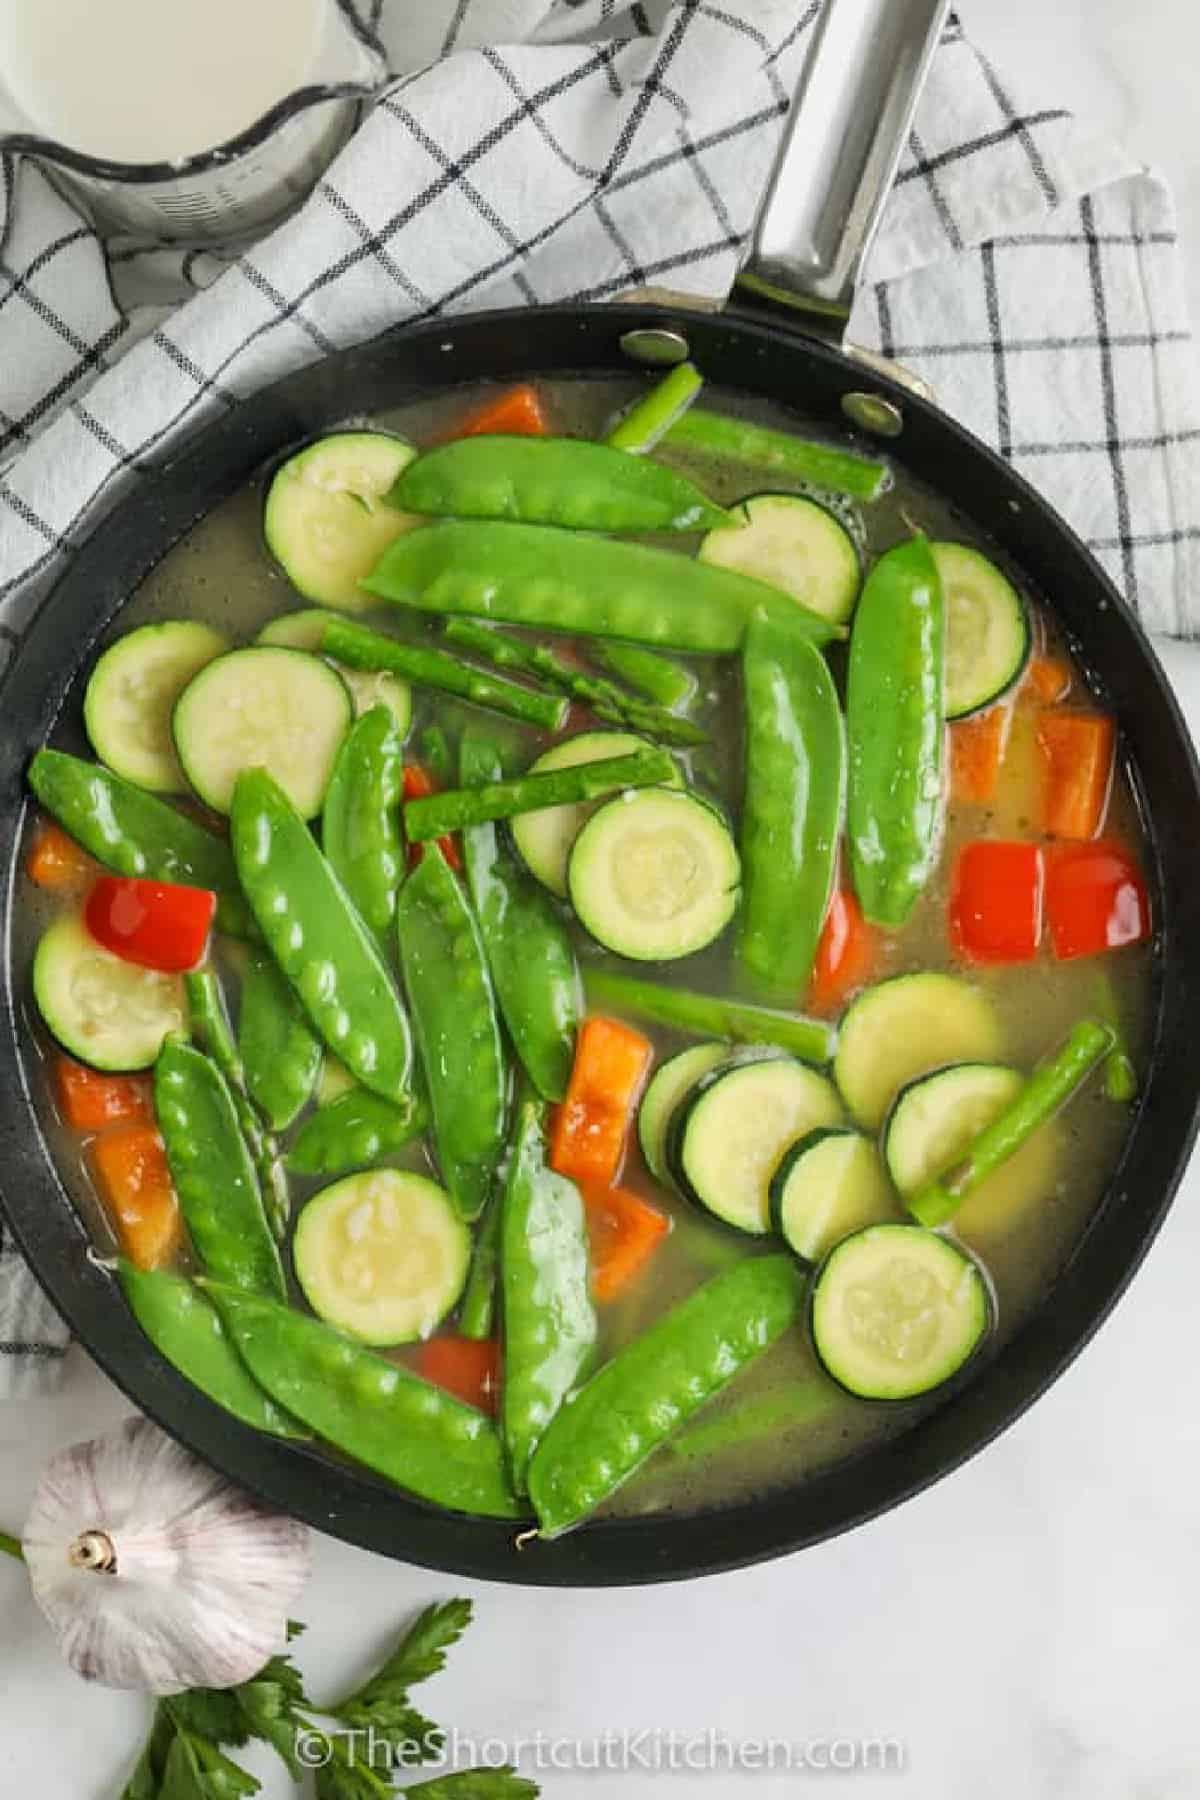 pasta primavera recipe vegetables in a frying pan